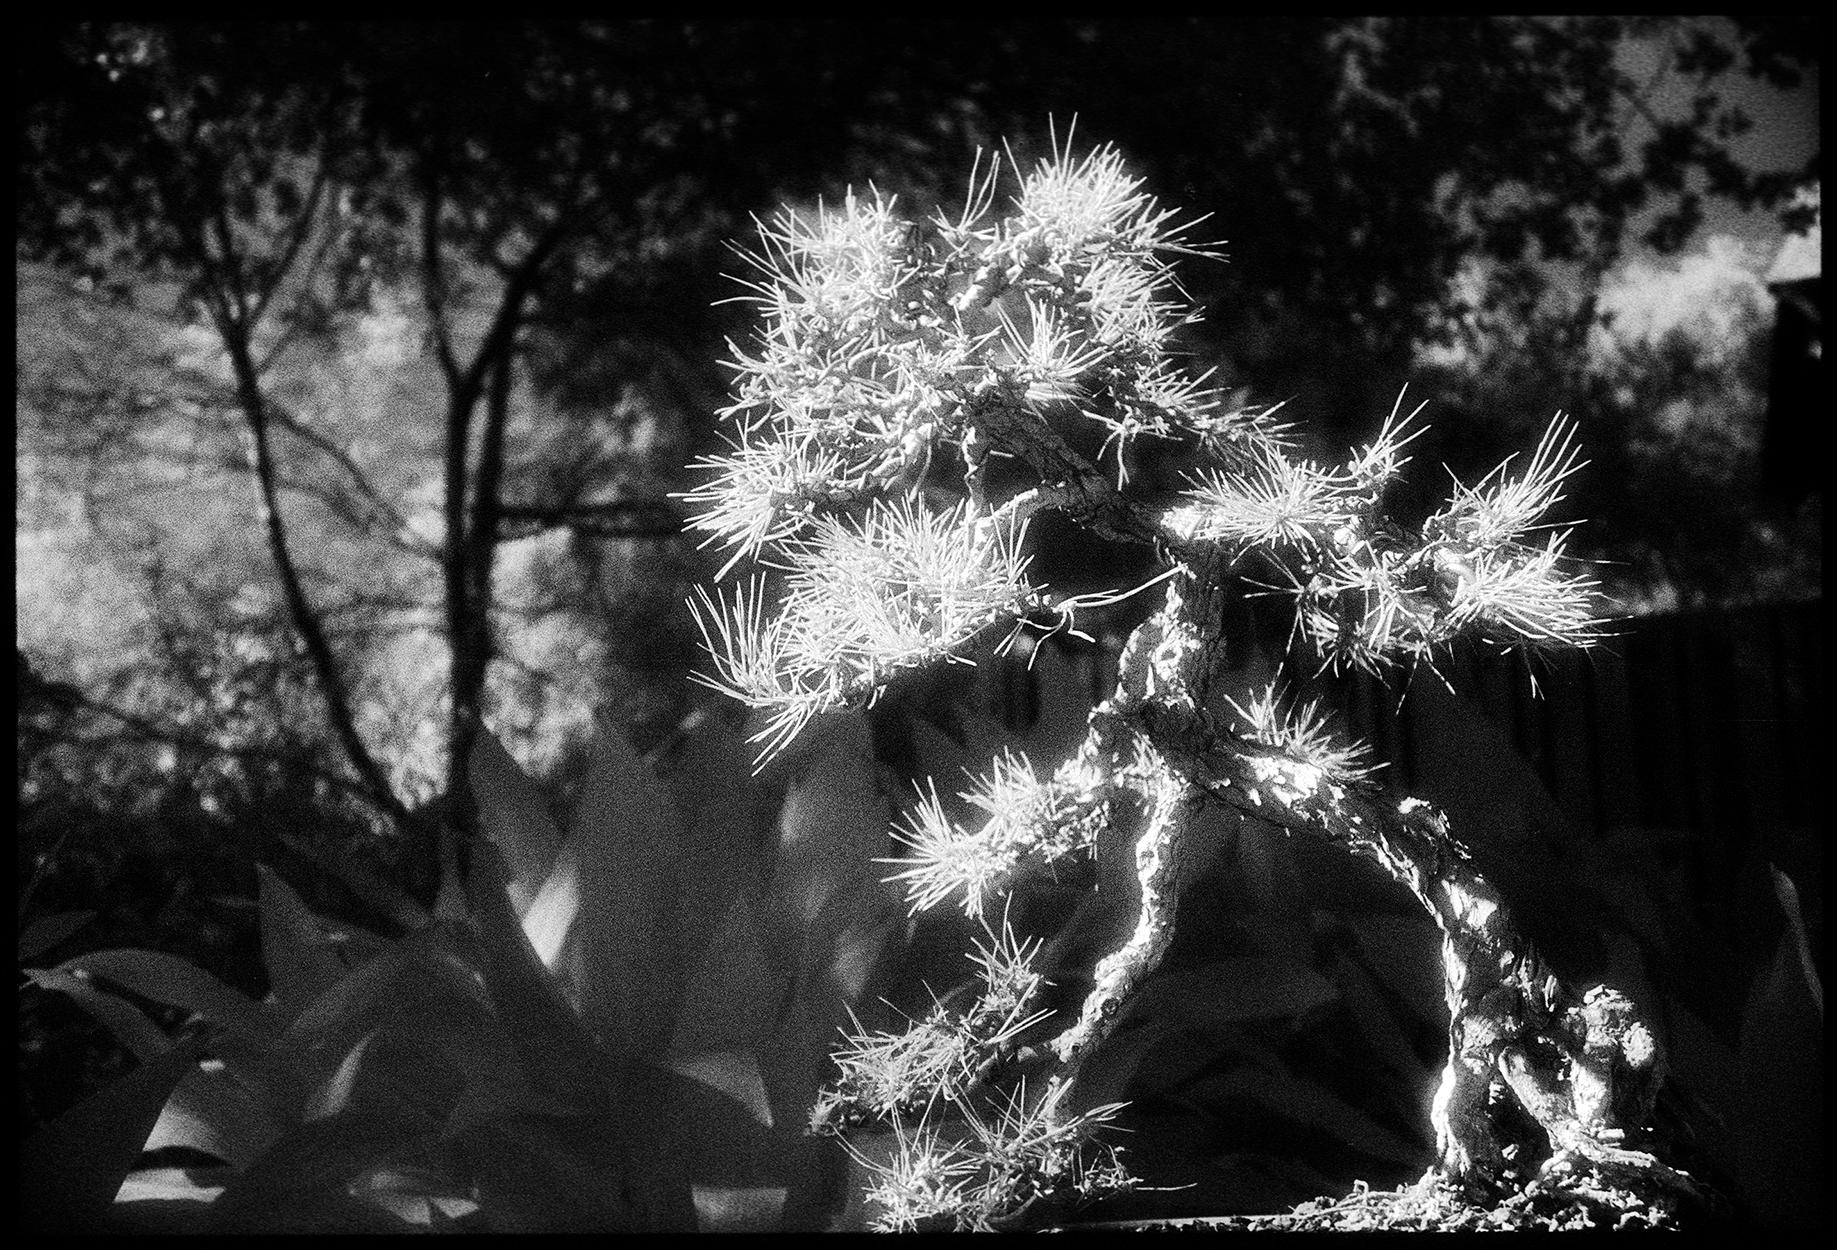 Edward Alfano Black and White Photograph - Huntington Gardens XXXVI - Black & White Landscape Photography of Catus / Plants